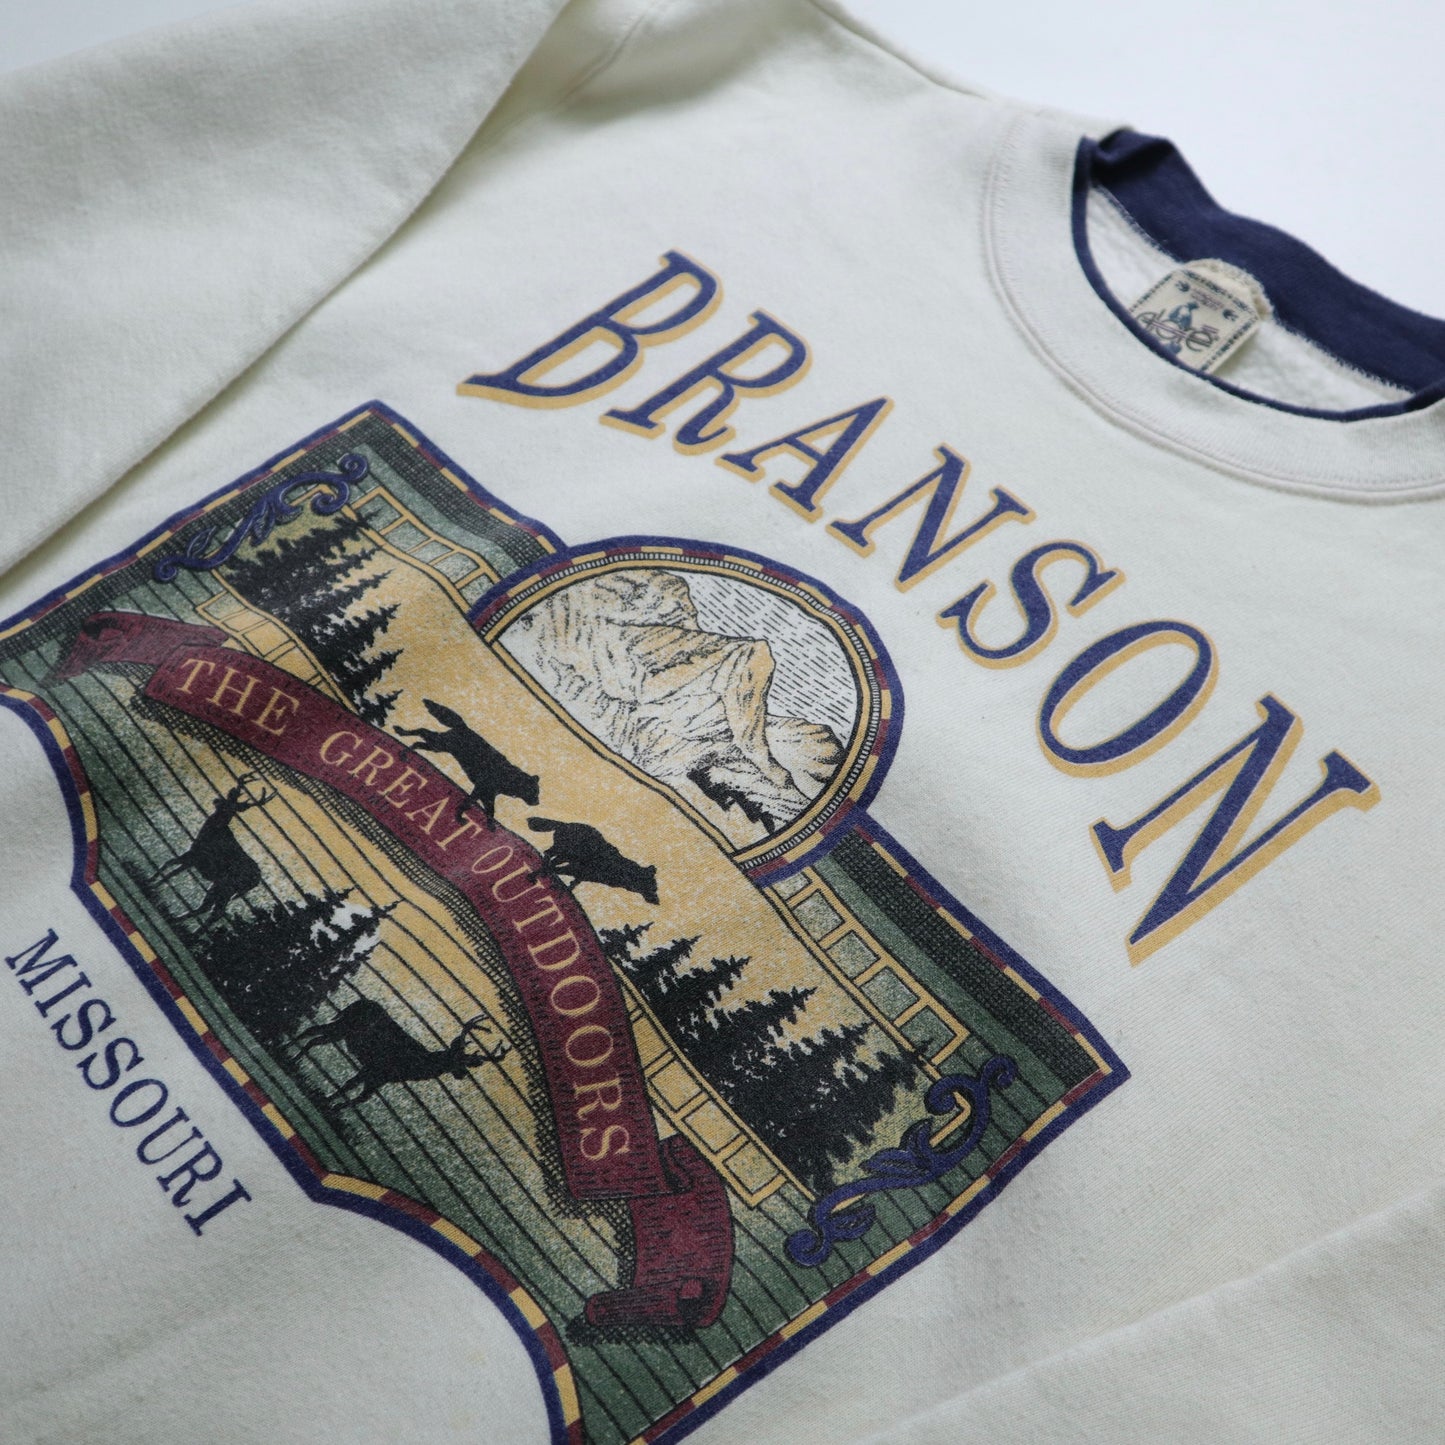 90s vintage American made Missouri Outdoors two-color collar college tee vintage sweatshirt